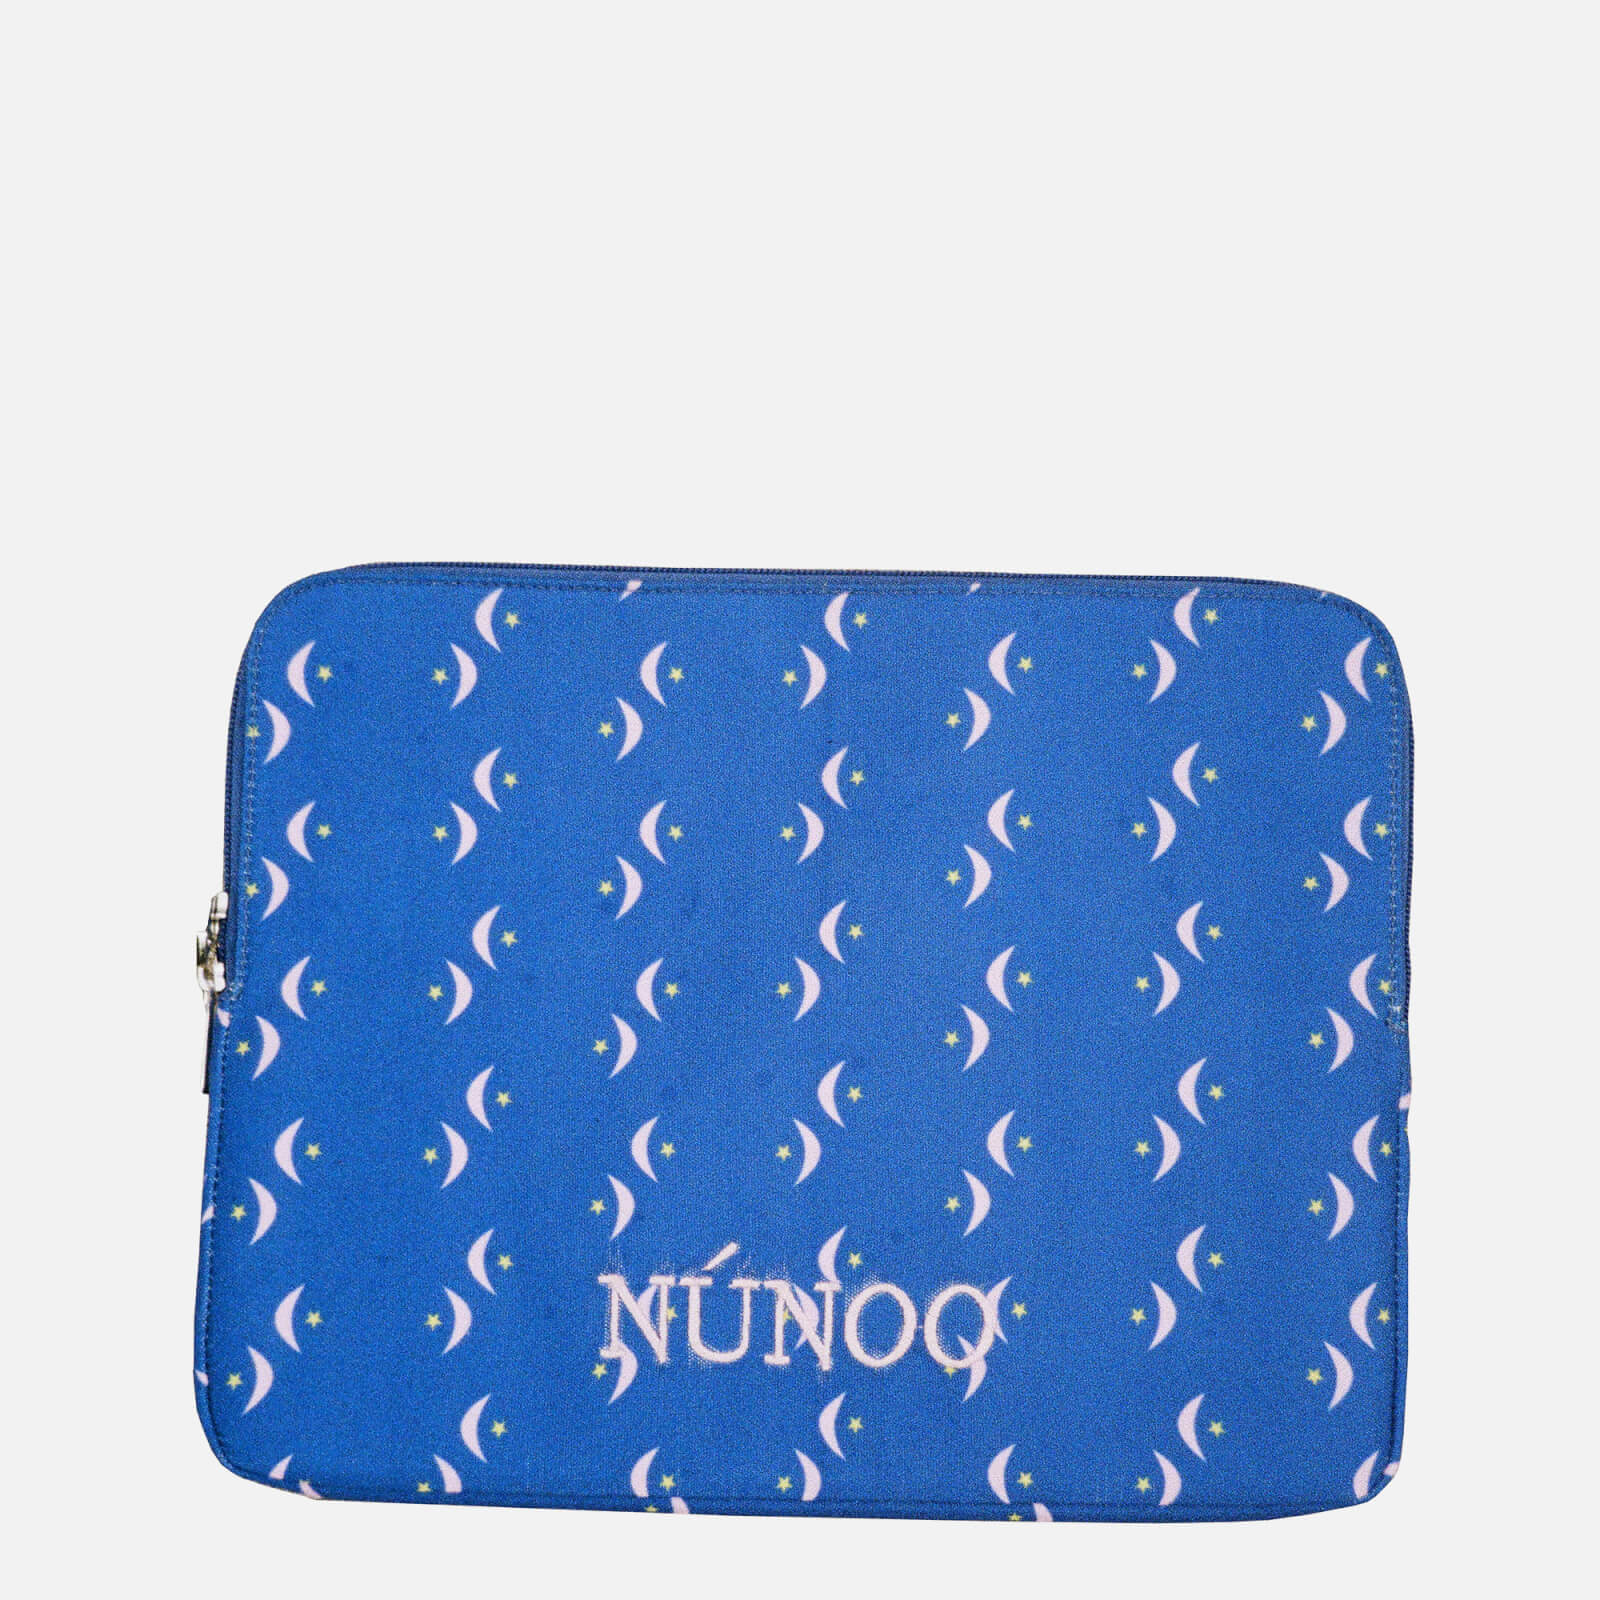 Nunoo Moon Print Recycled Canvas Laptop Bag